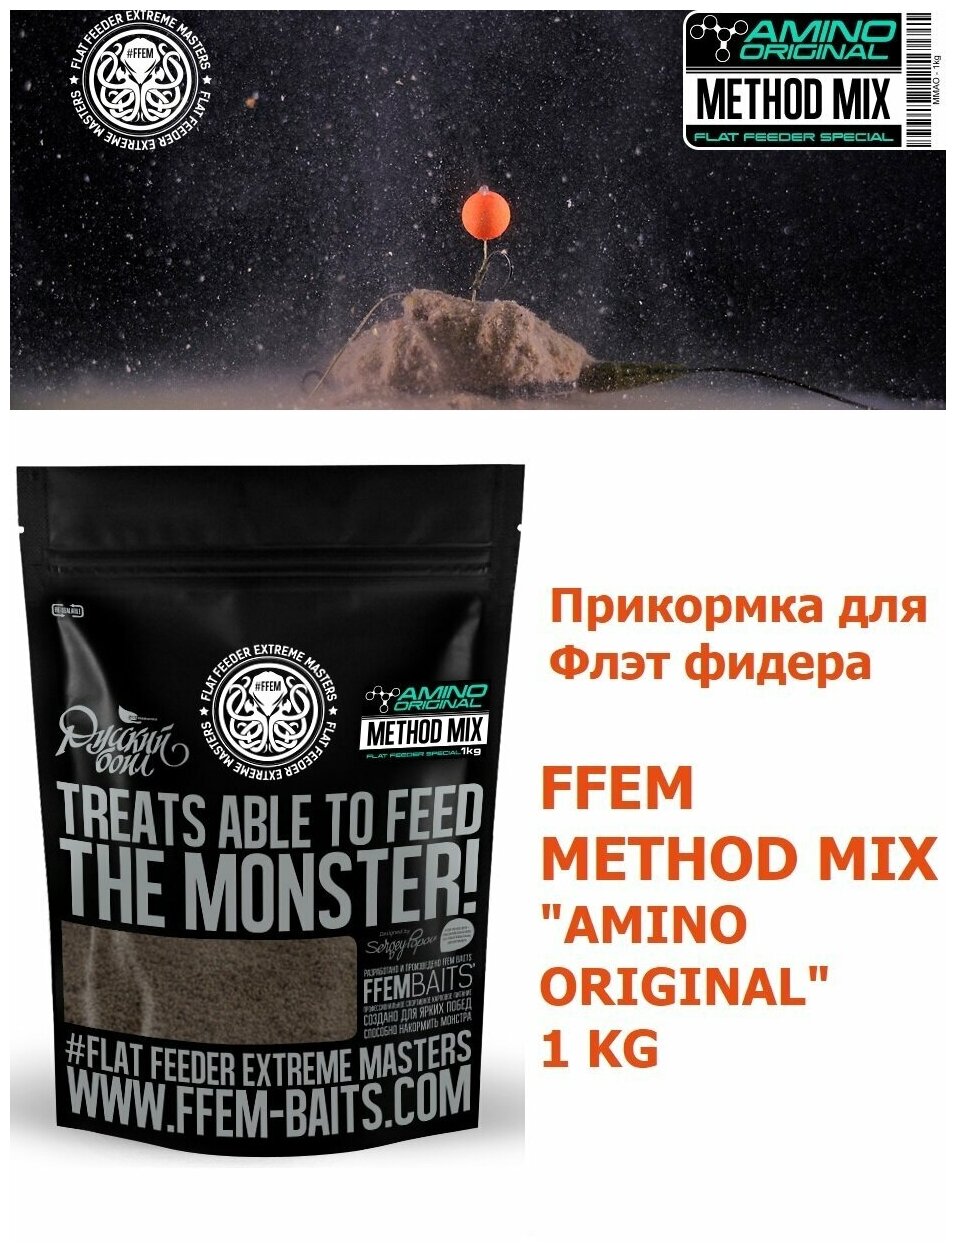 FFEM Method Mix Amino Original 1kg